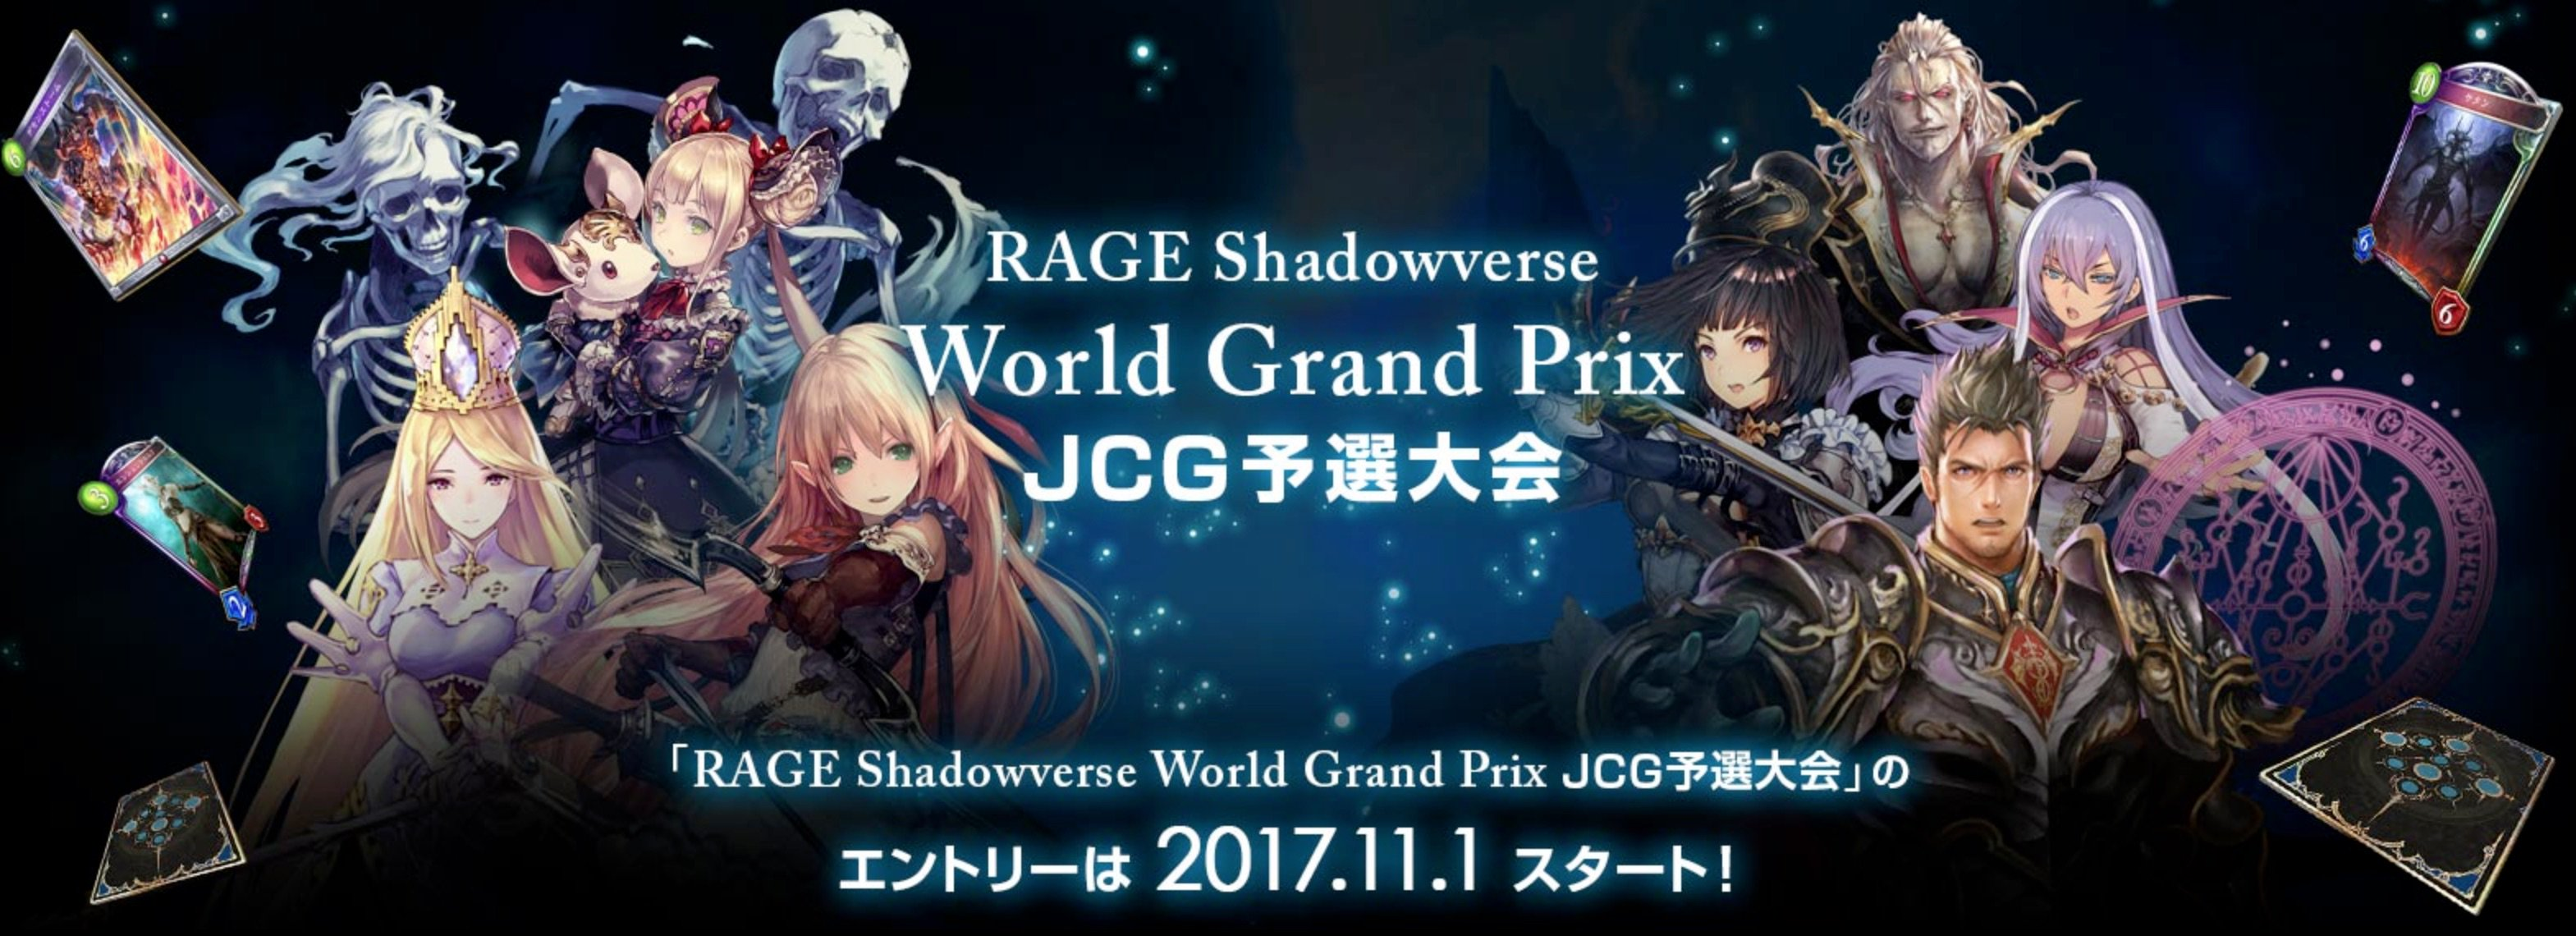 RAGE Shadowverse World Grand Prix JCG予選大会プレーオフ開催のお知らせとストリーミング生放送 番組情報